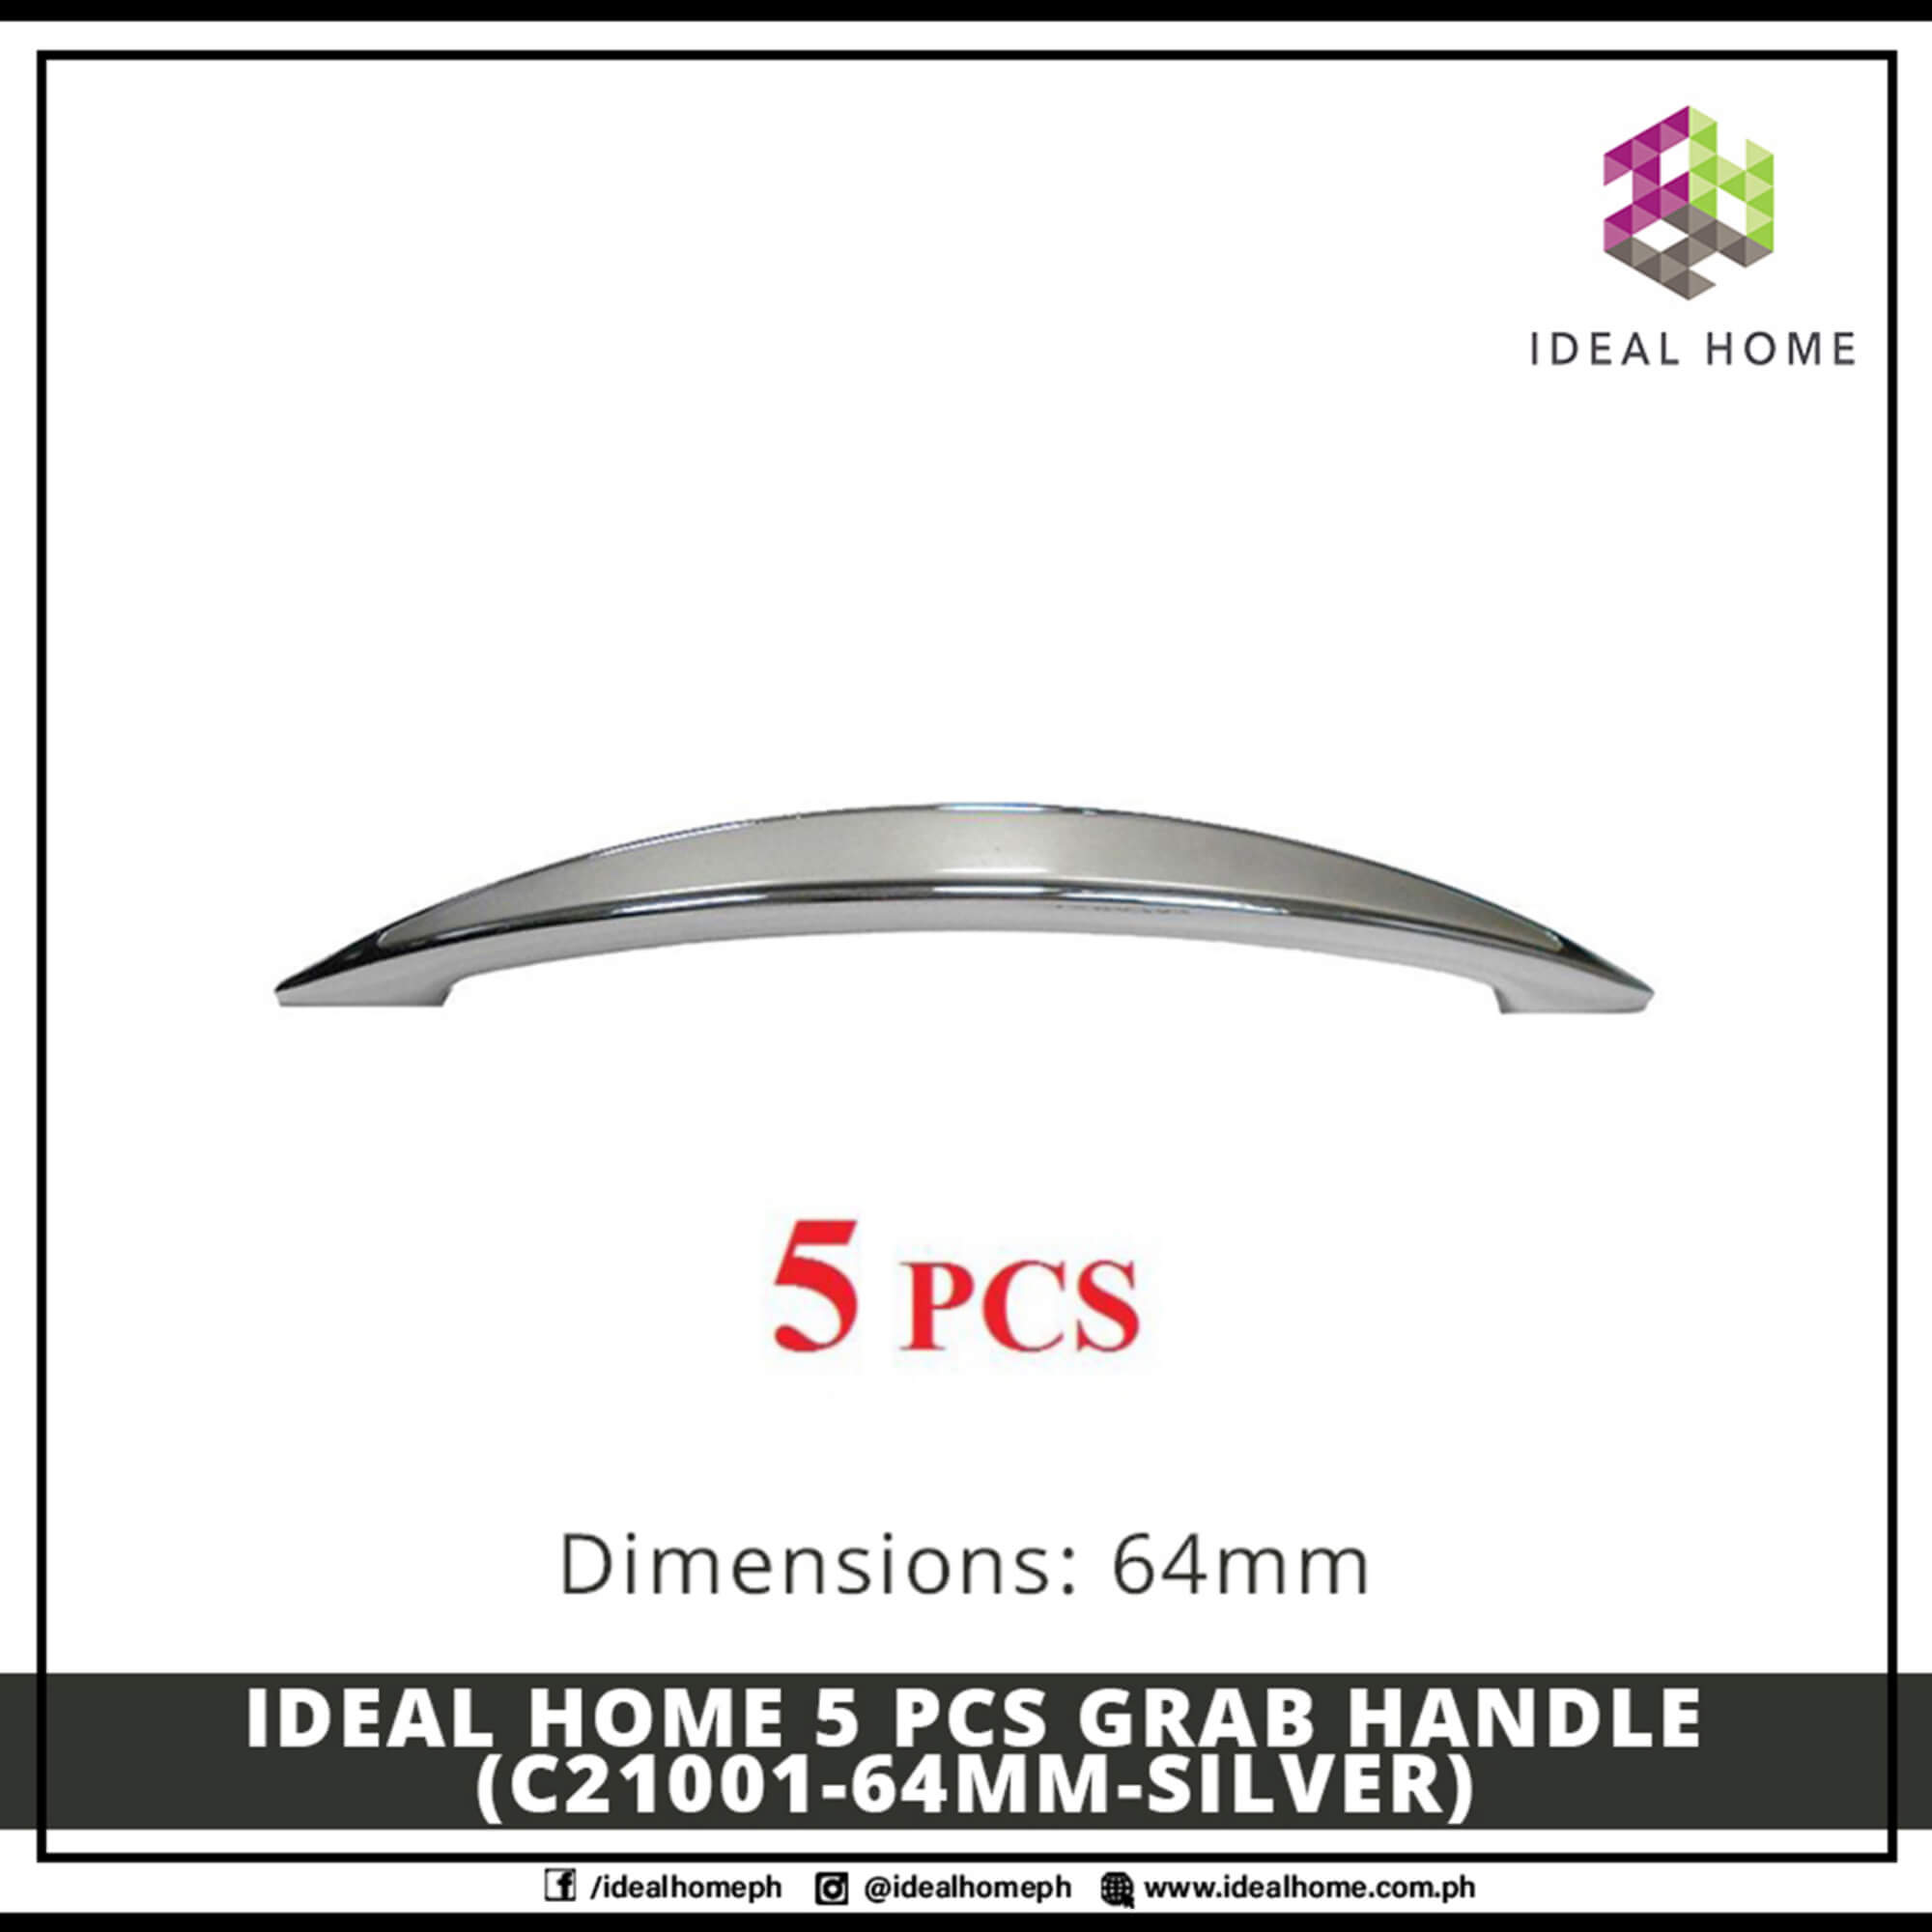 Ideal Home 5 PCS Grab Handle (C21001-64mm-SILVER)